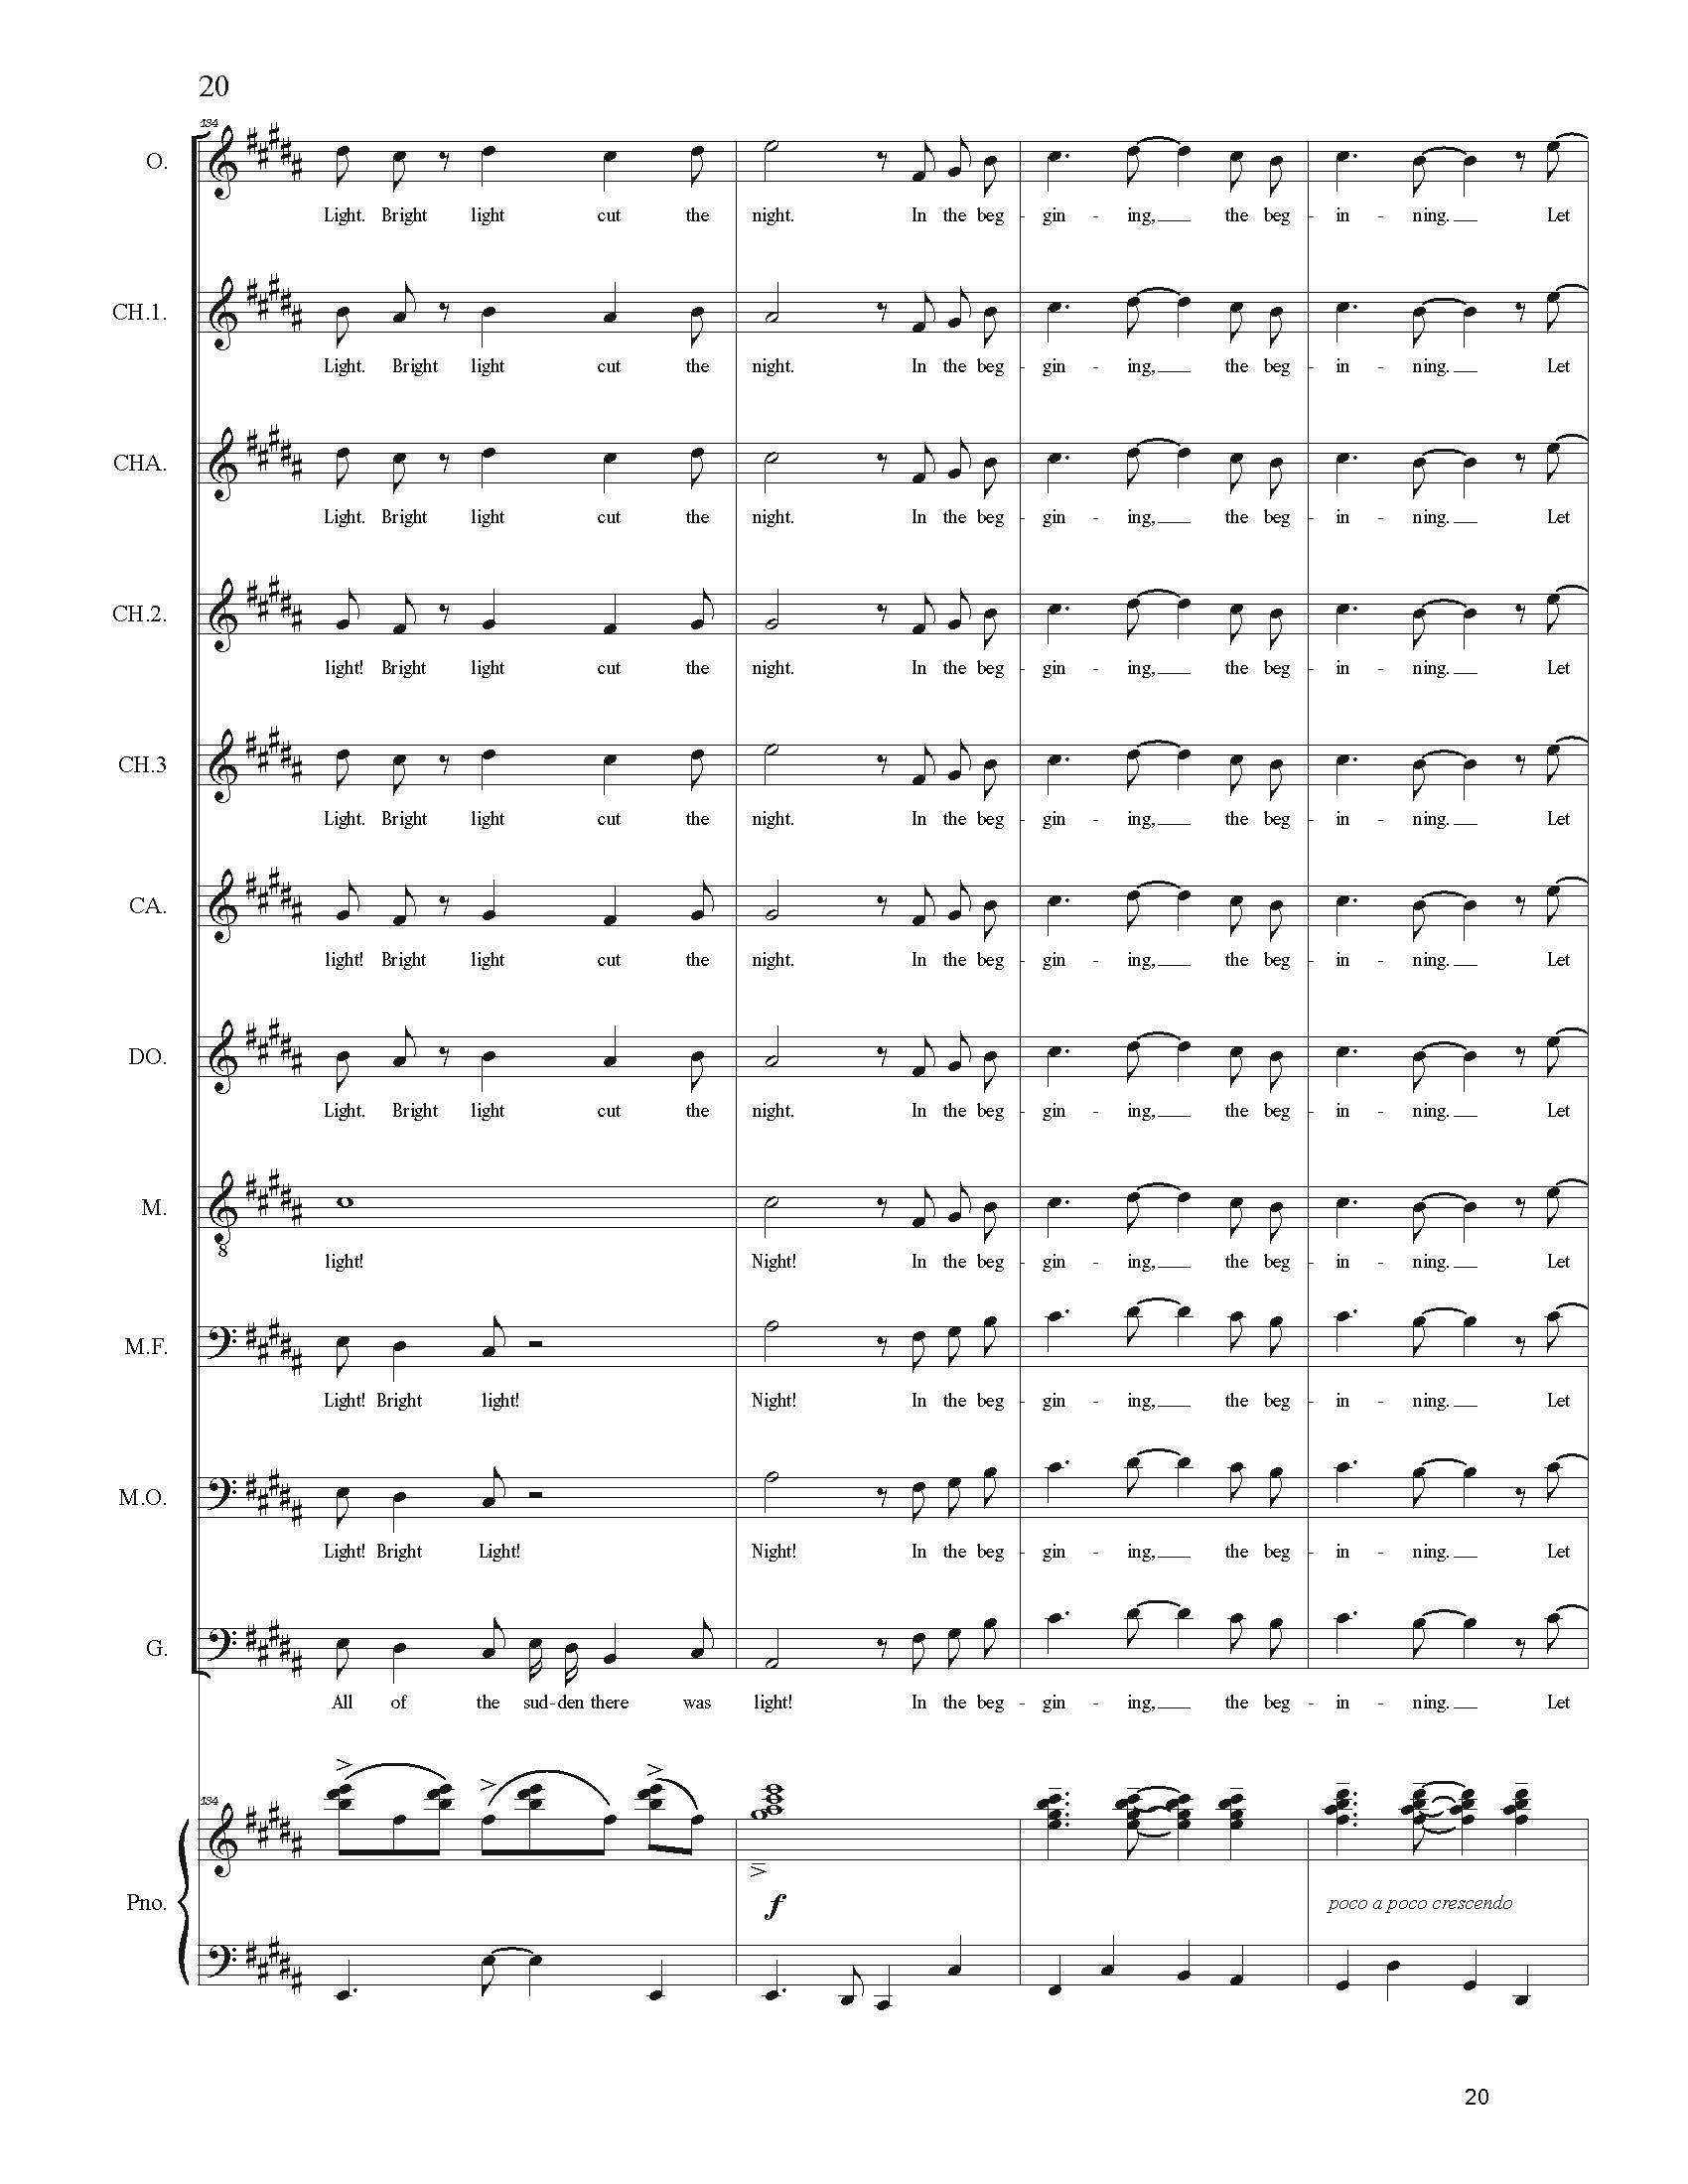 FULL PIANO VOCAL SCORE DRAFT 1 - Score_Page_020.jpg